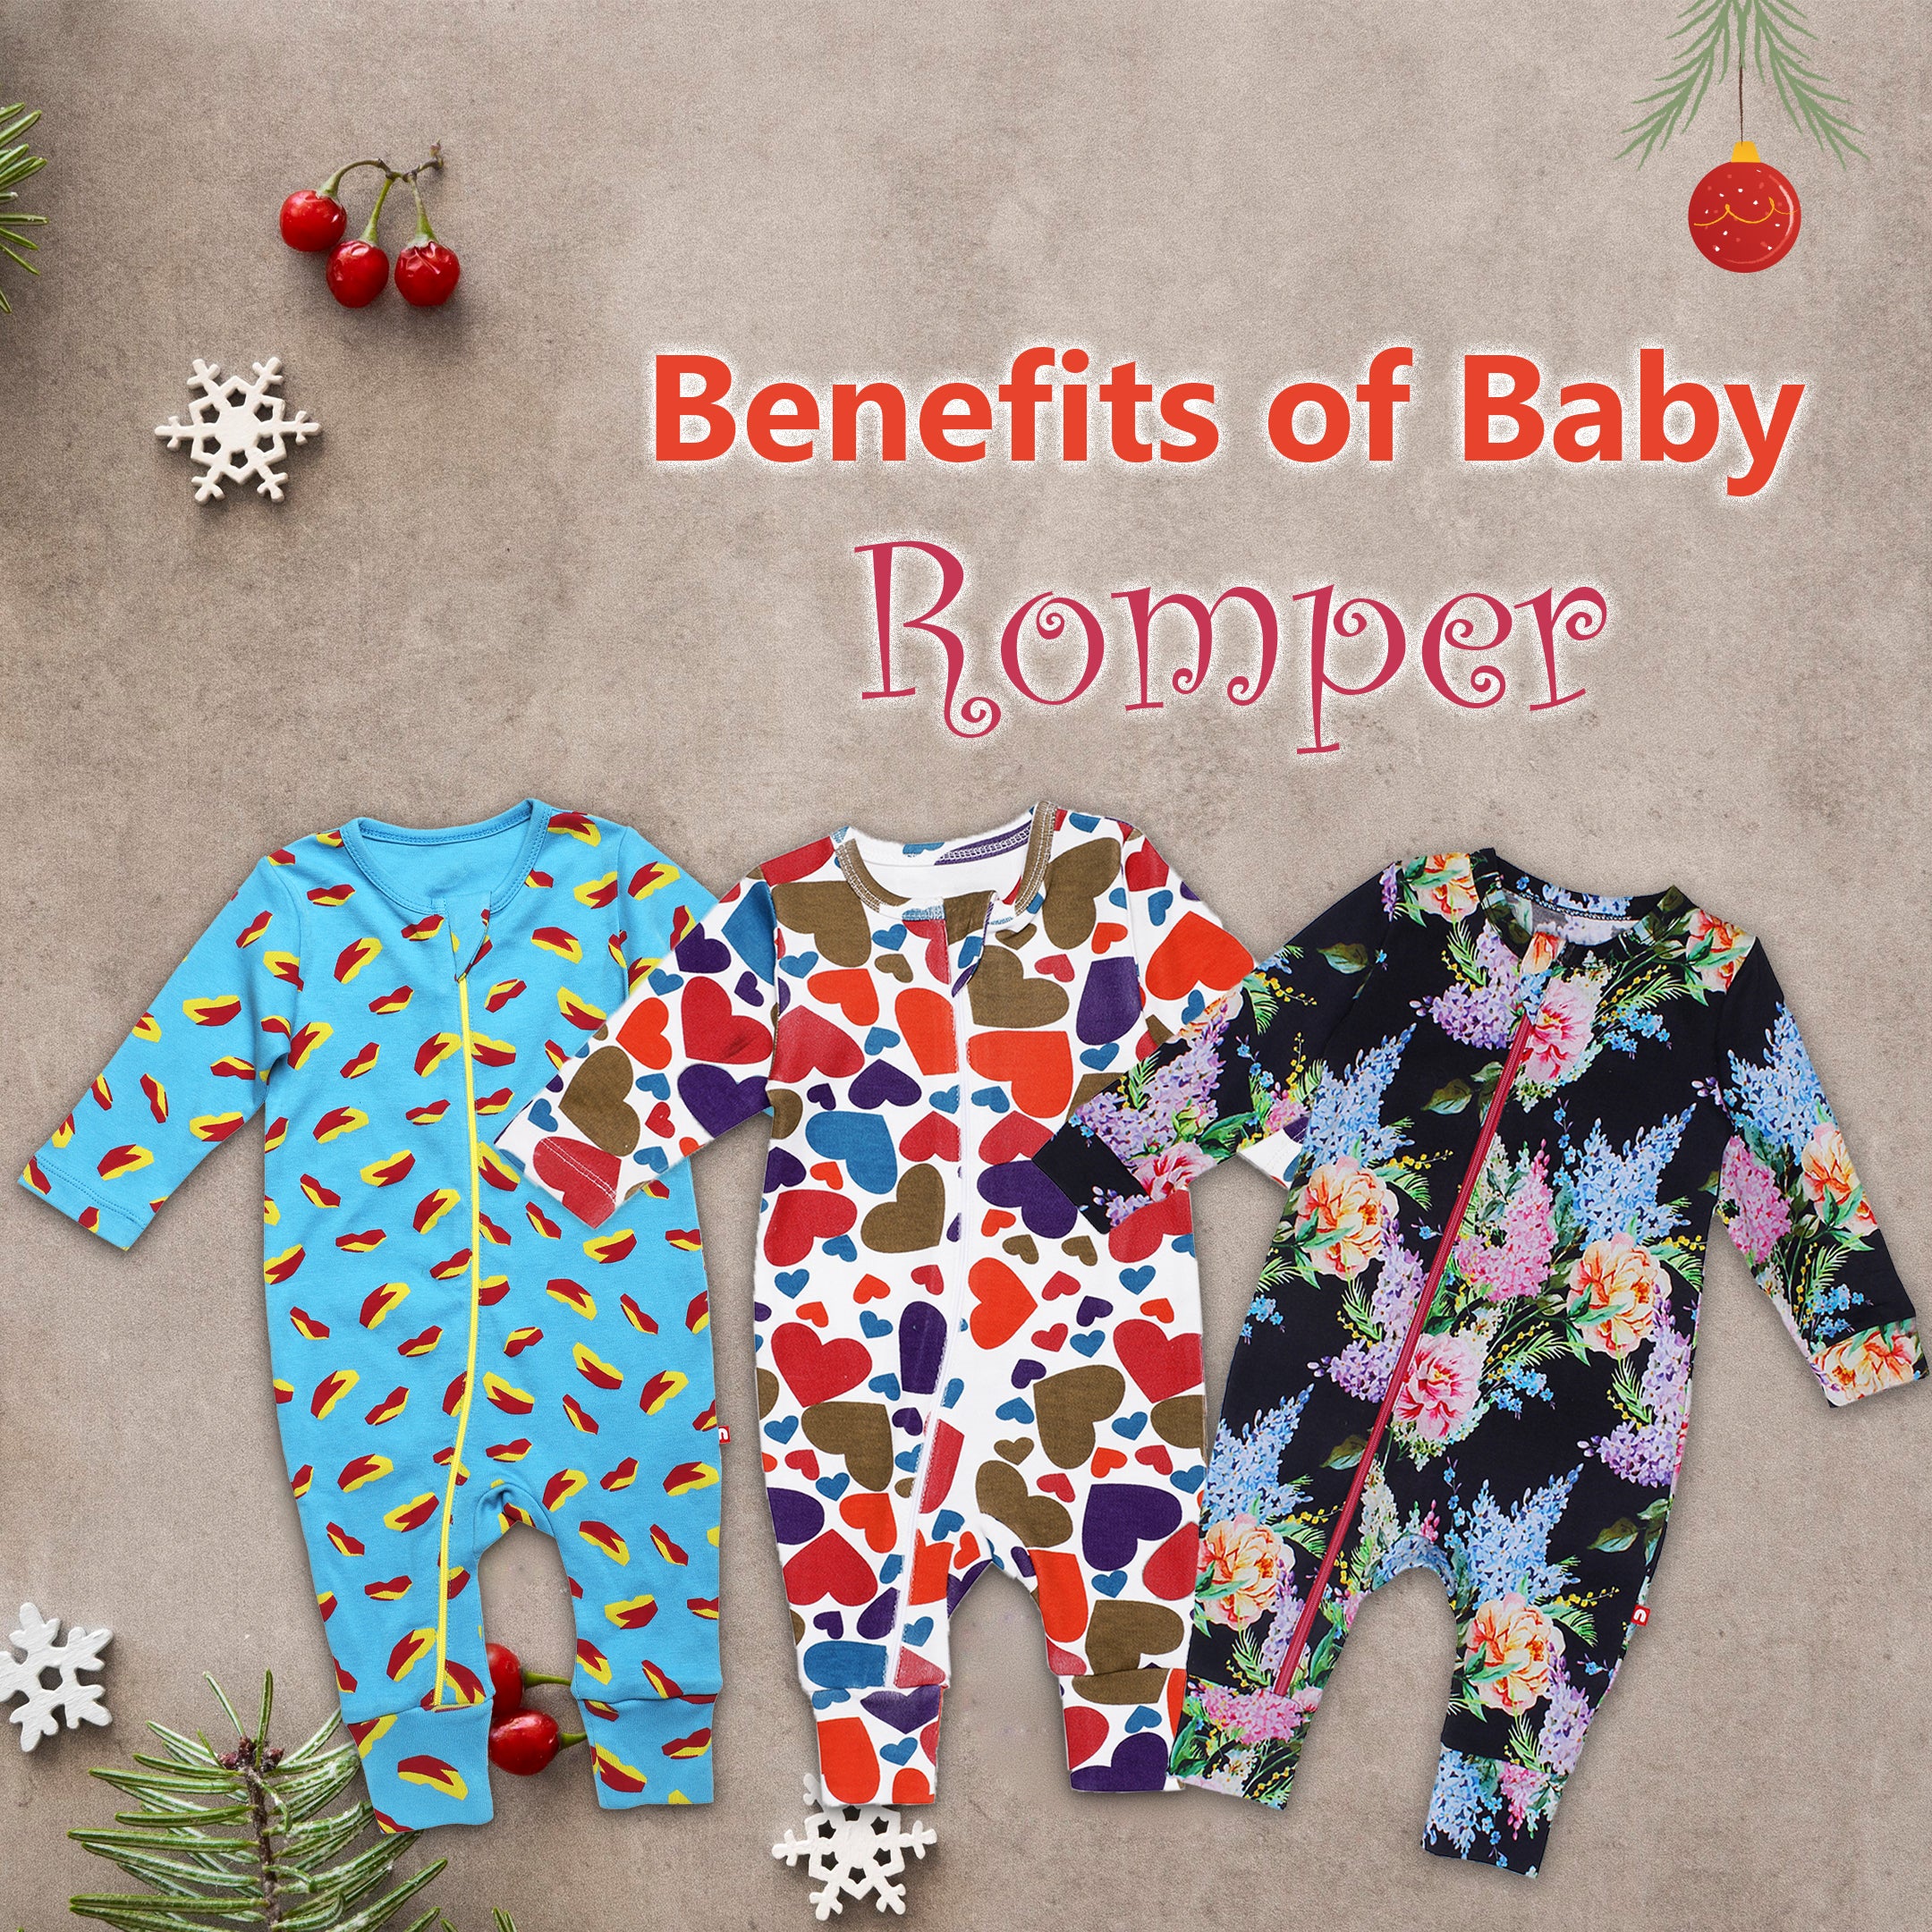 The Benefits of Baby Romper